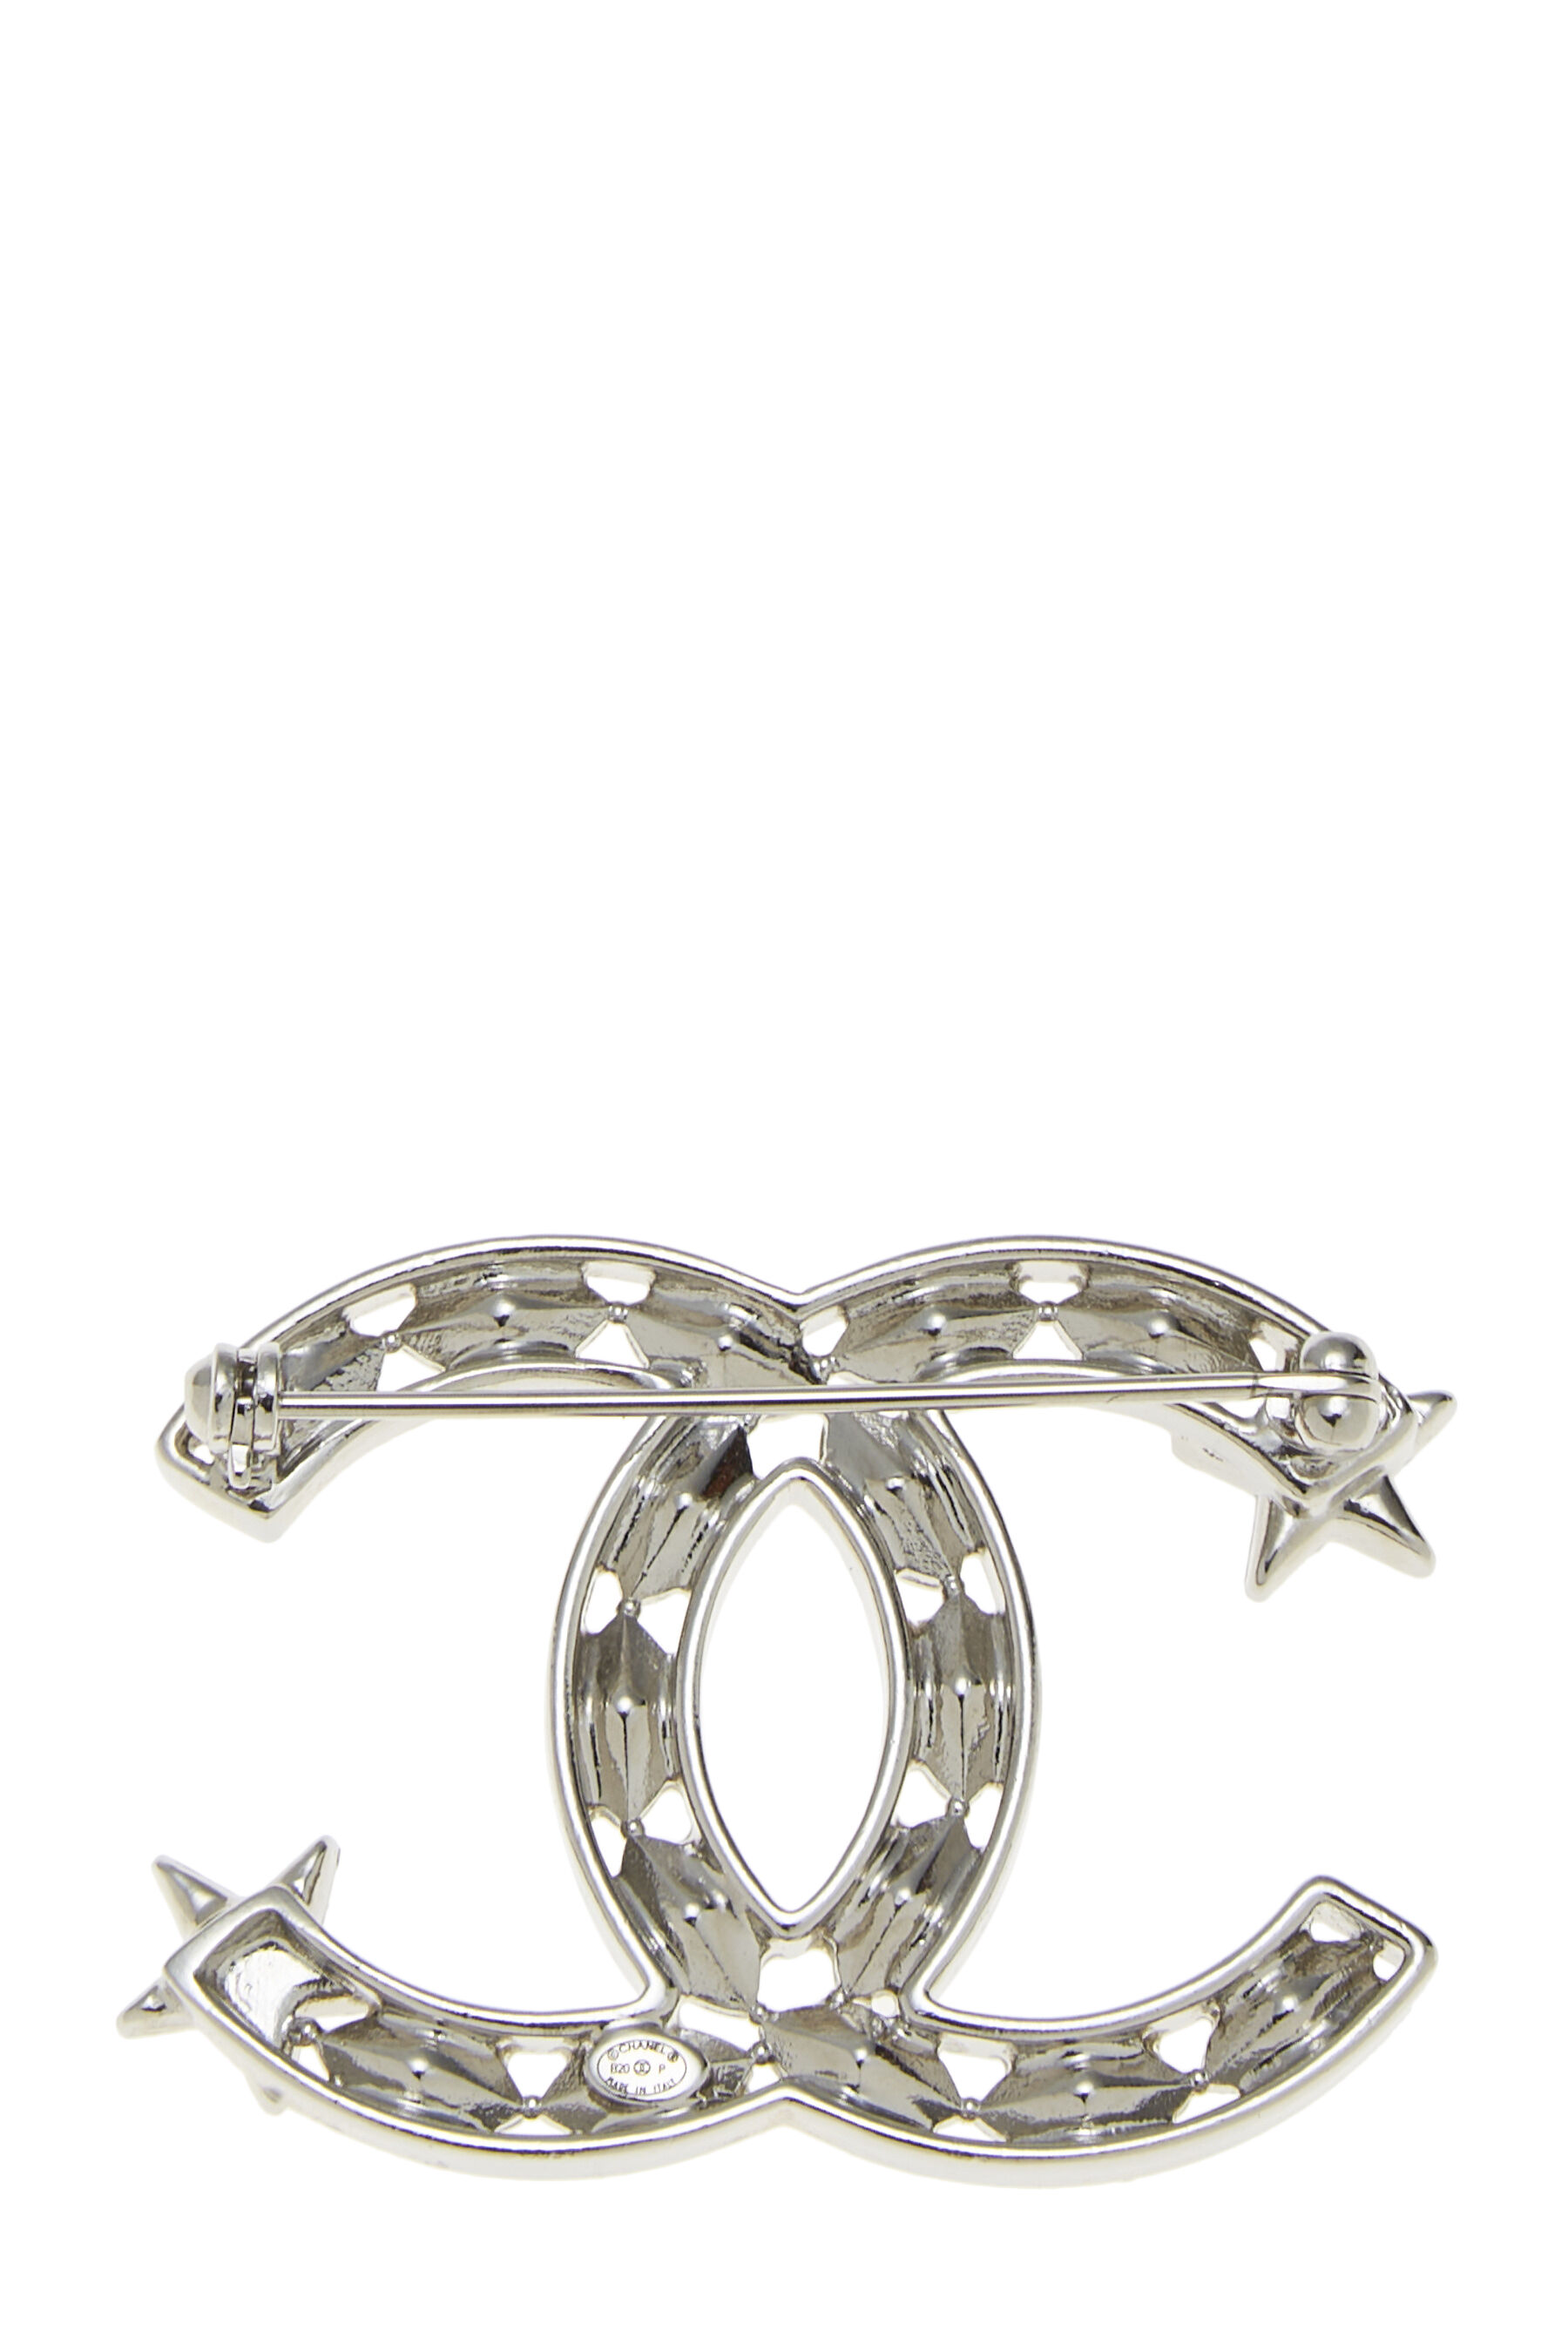 Chanel - Silver Crystal CC Pin